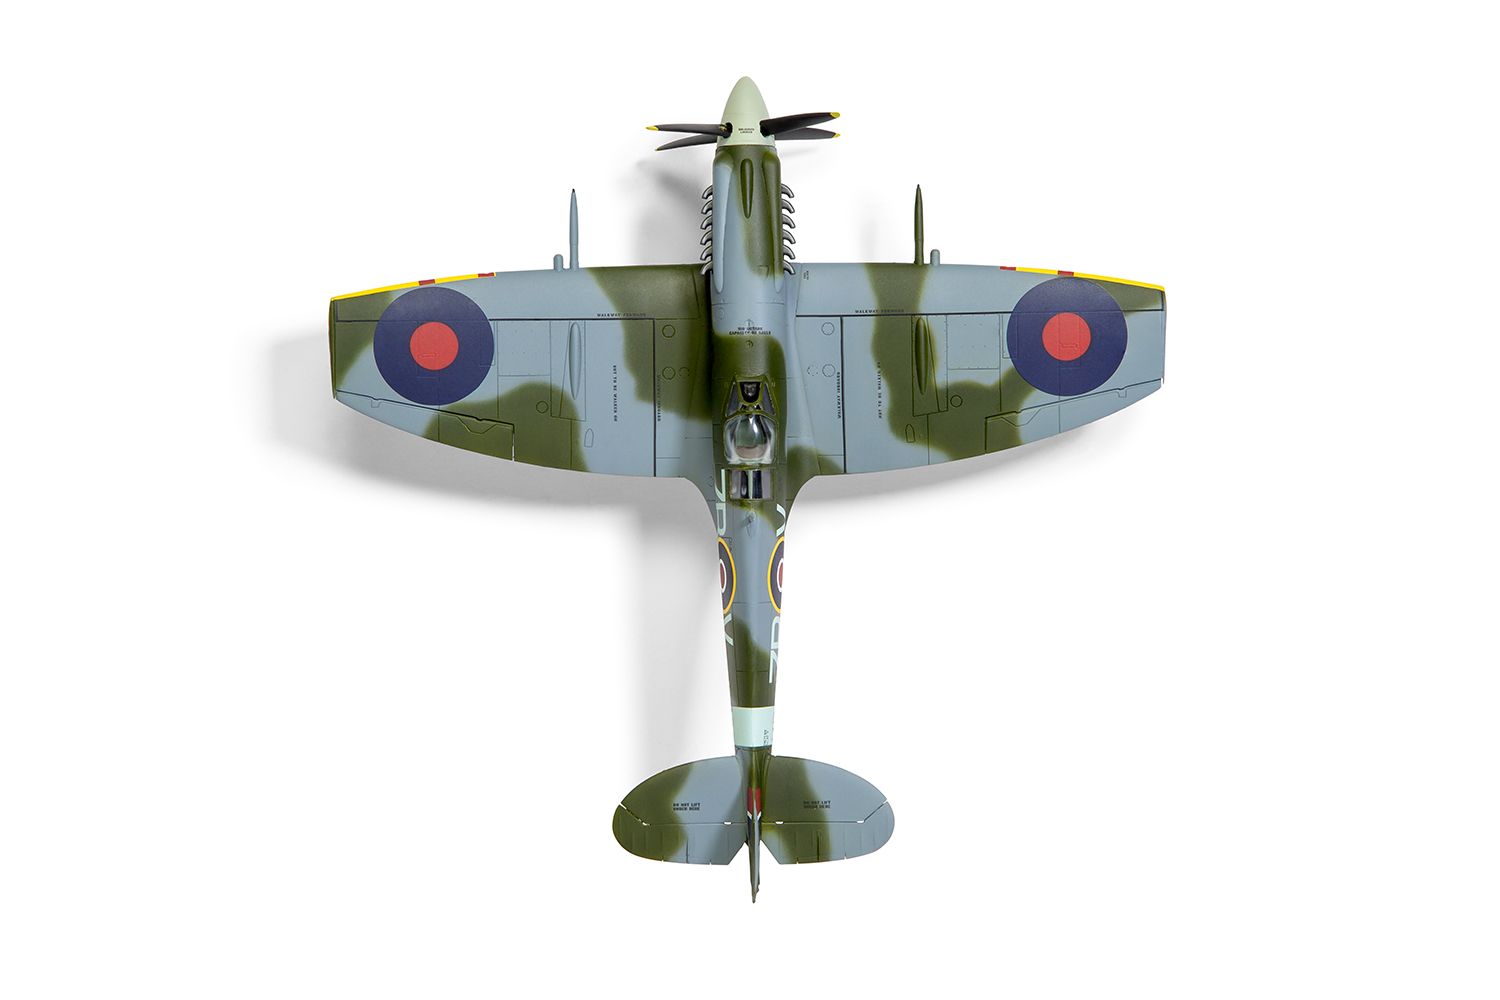 A05117A Supermarine Spitfire Mk.XII